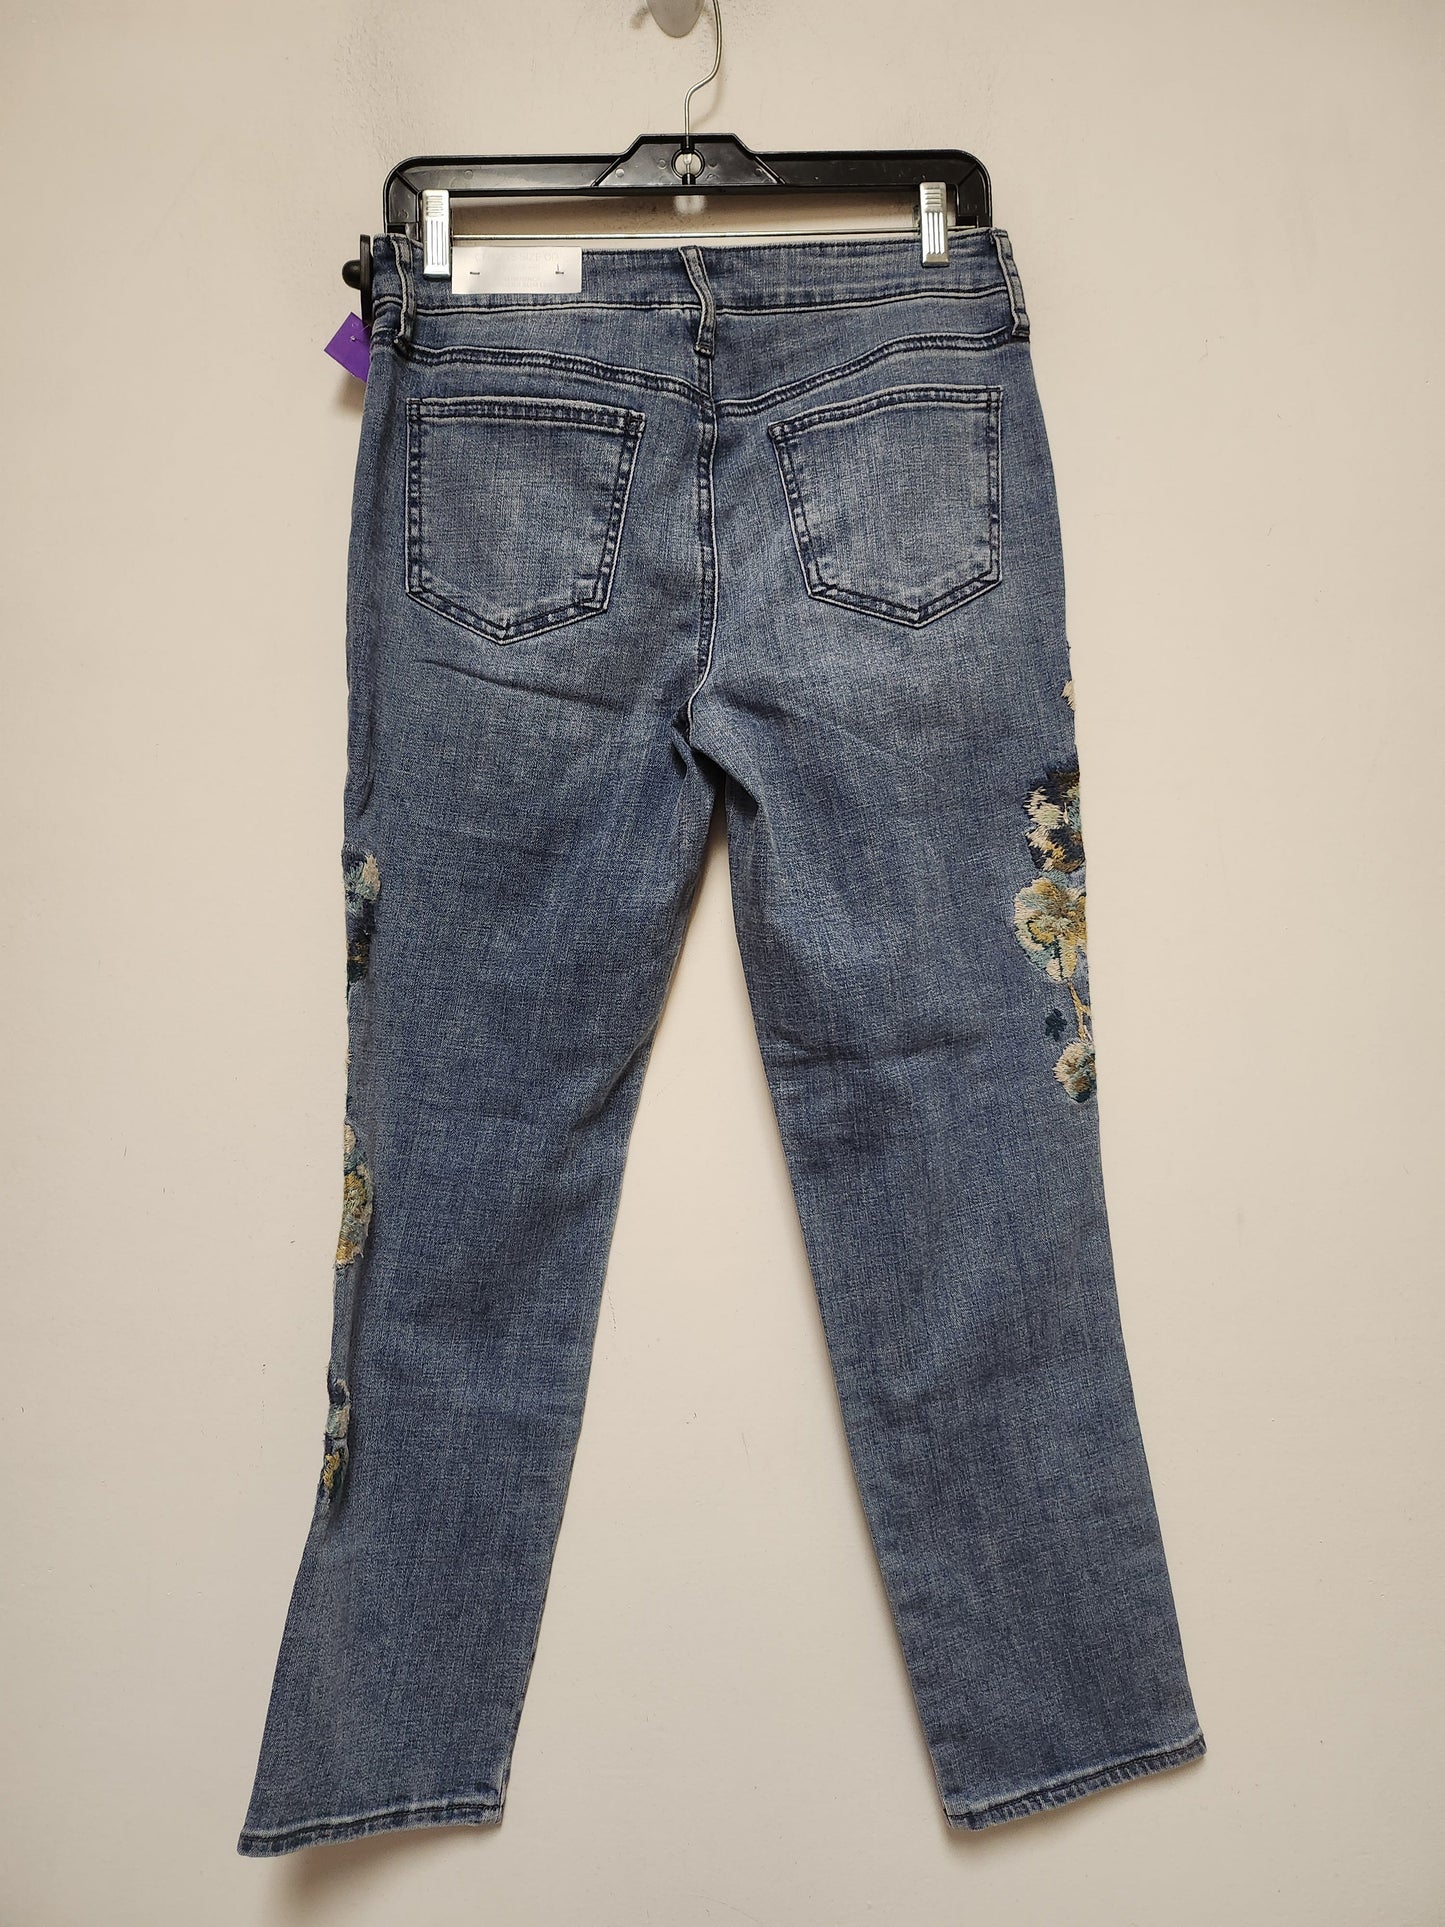 Blue Denim Jeans Straight Chicos, Size 4